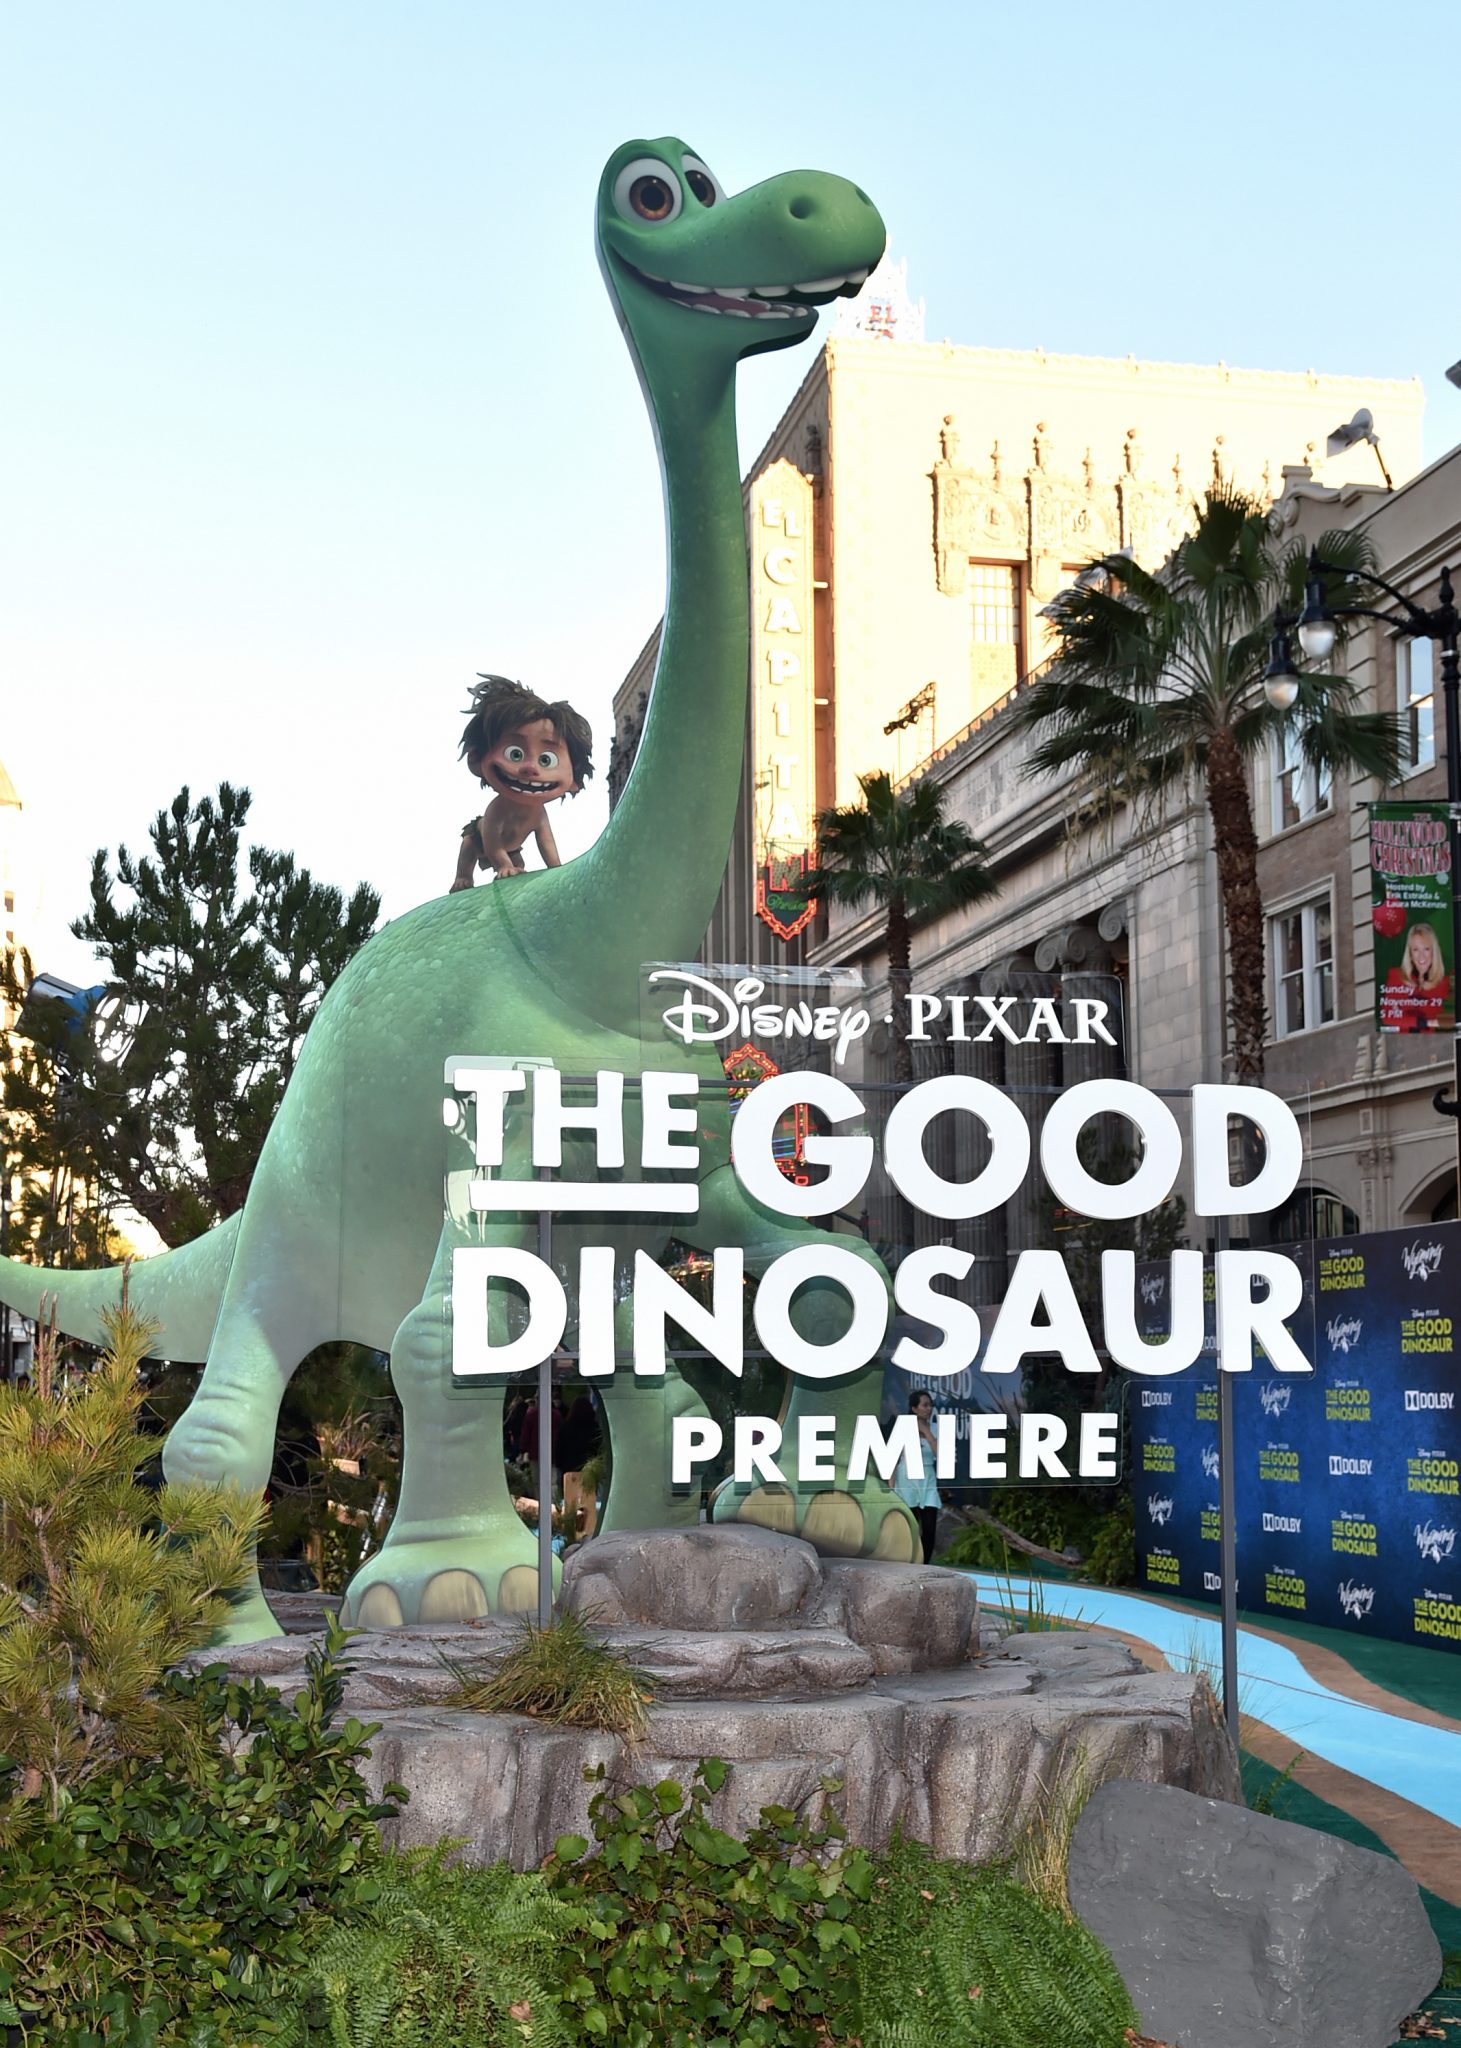 Disney & Pixar Celebrate World Premiere of “The Good Dinosaur”